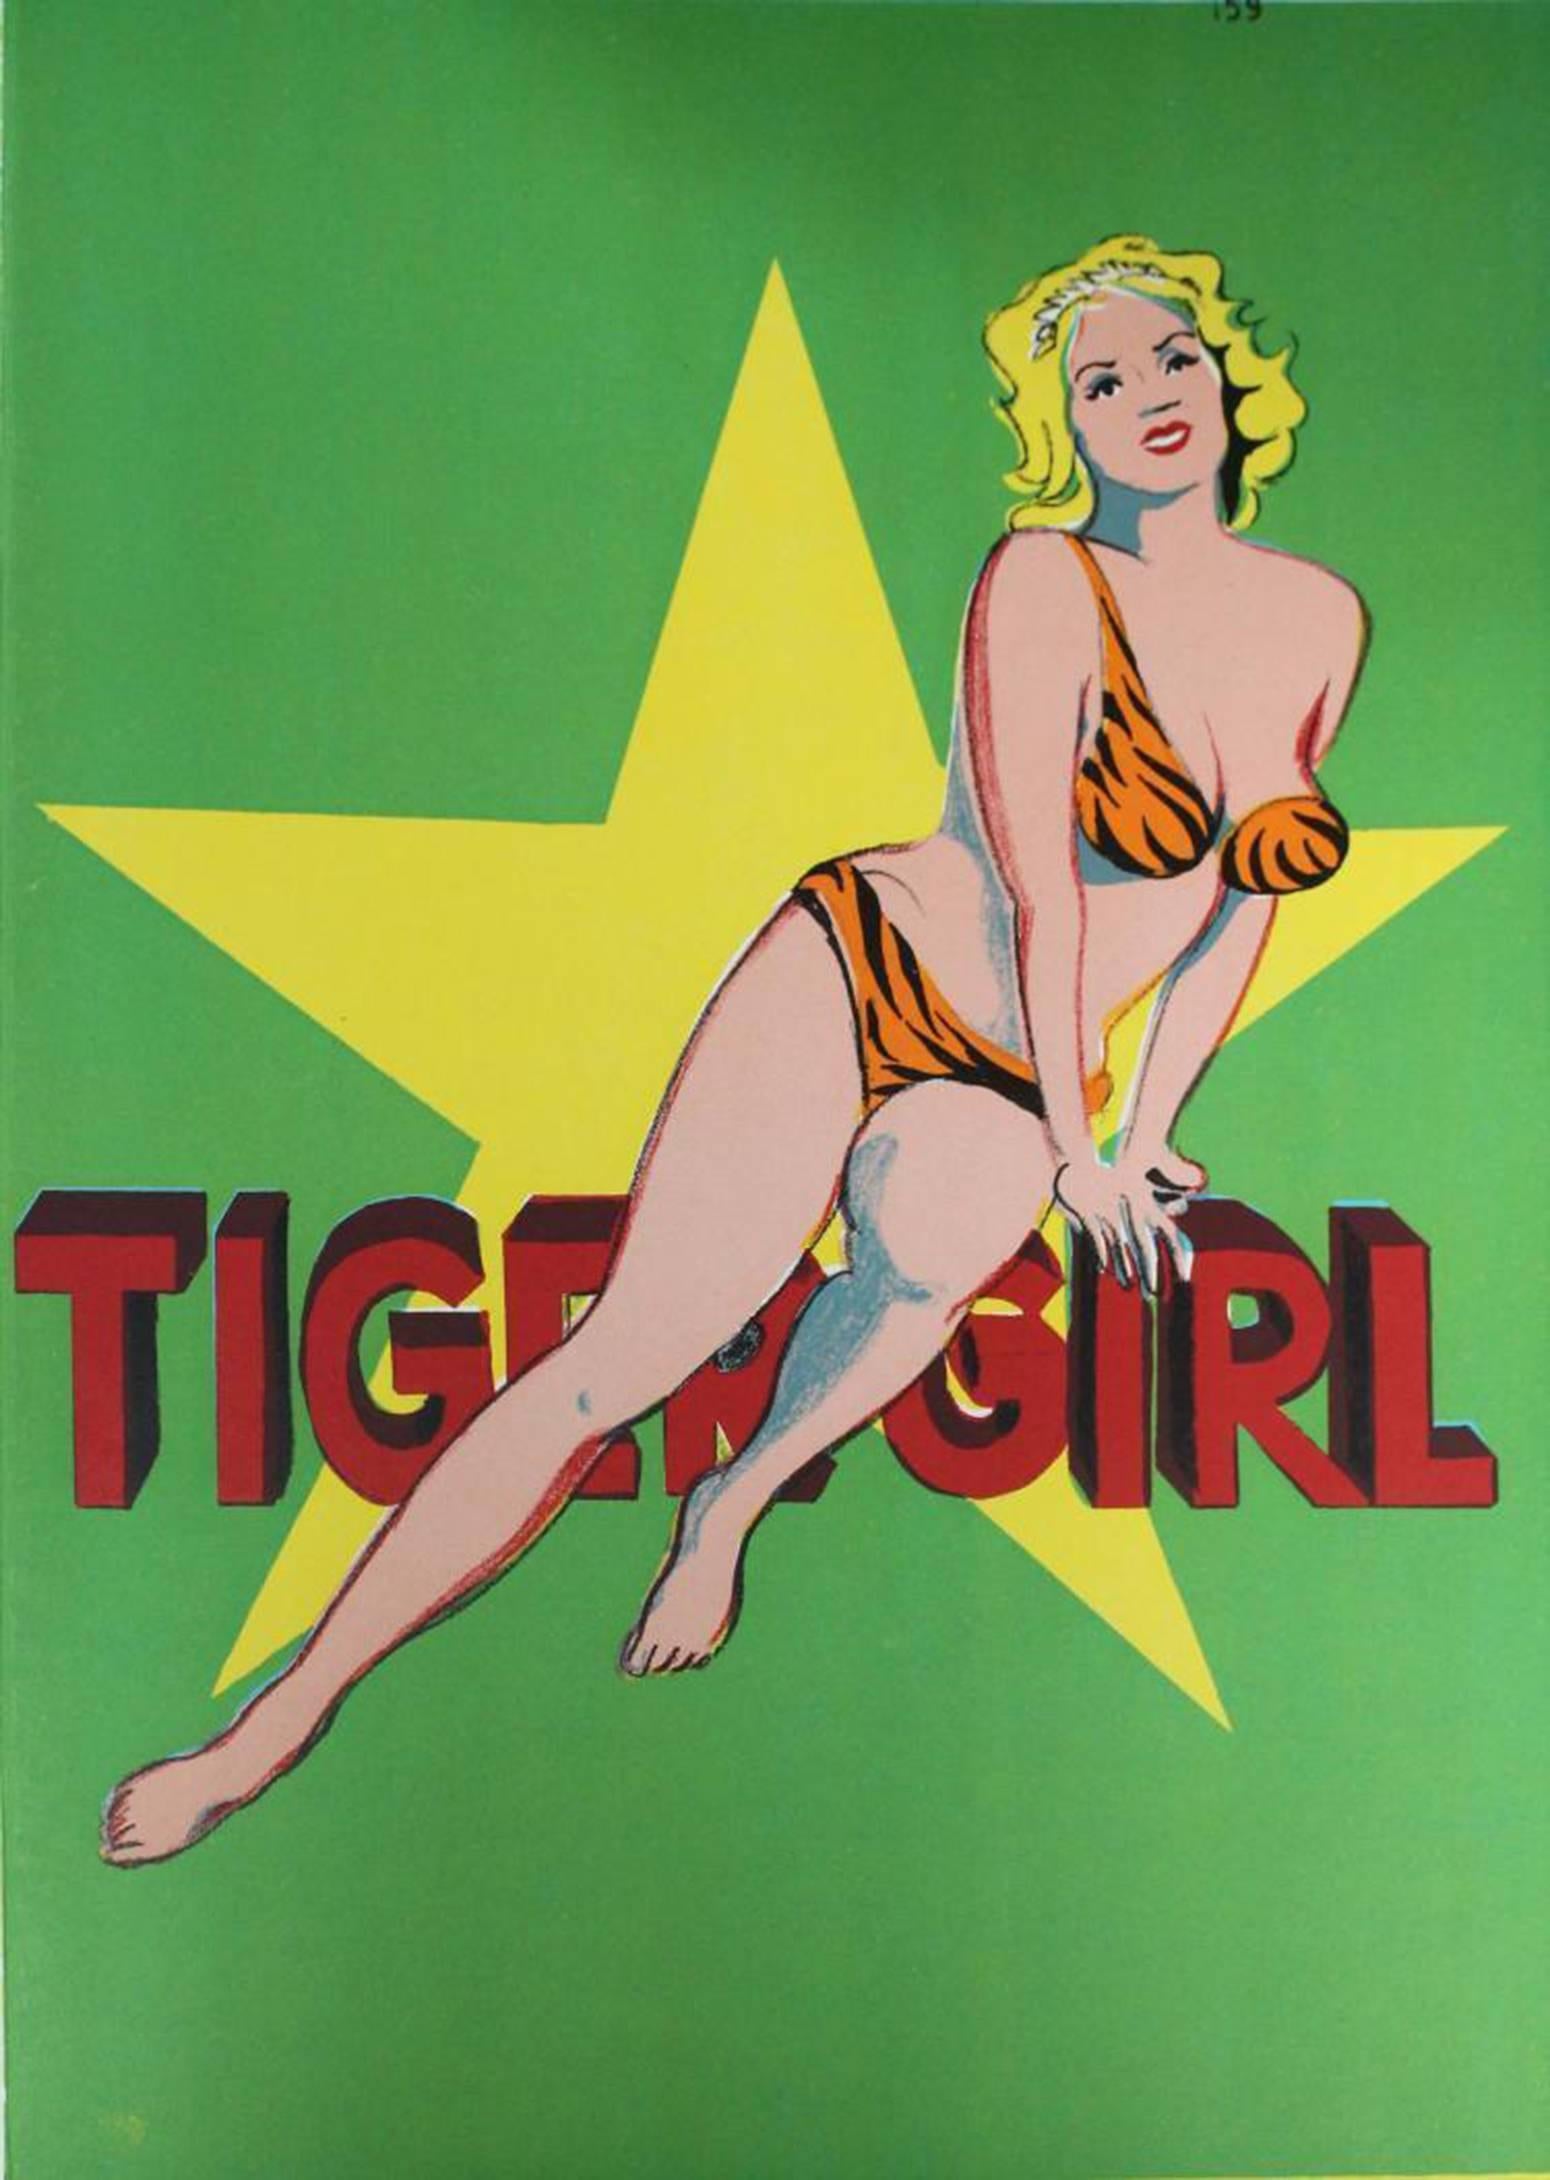 Tiger Girl - Pop Art Print by Mel Ramos